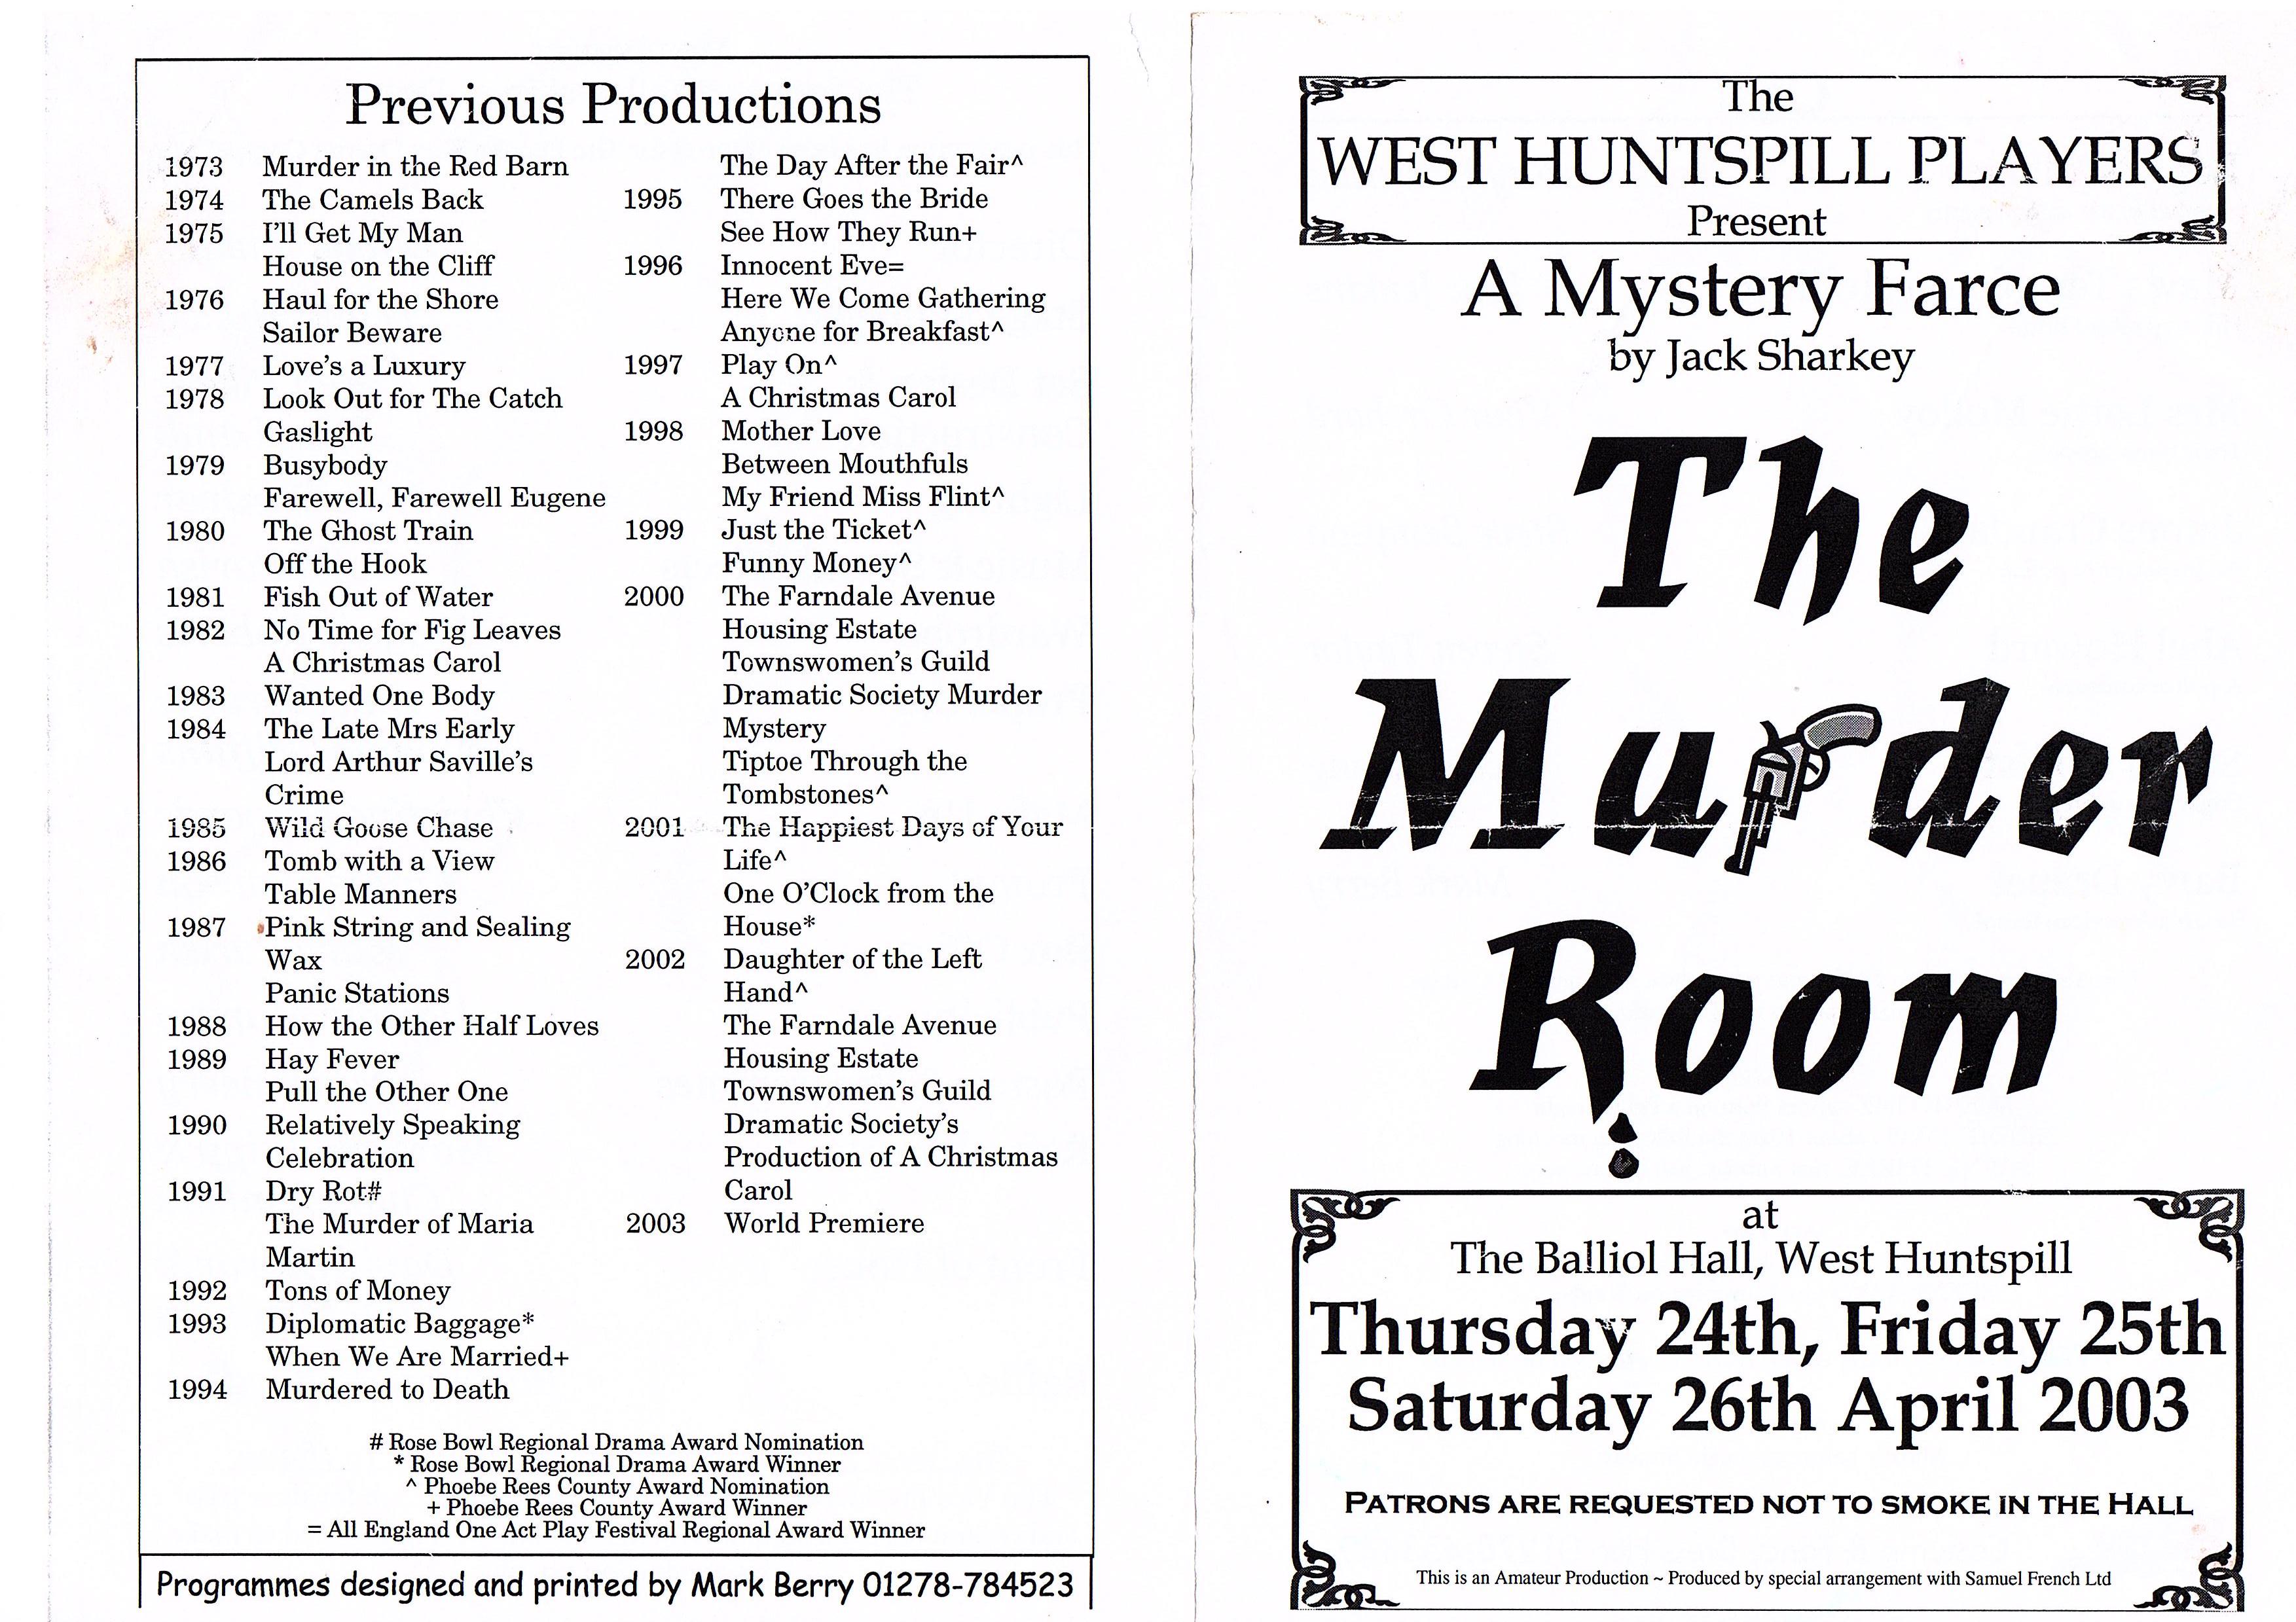 The Murder Room 2003 programme